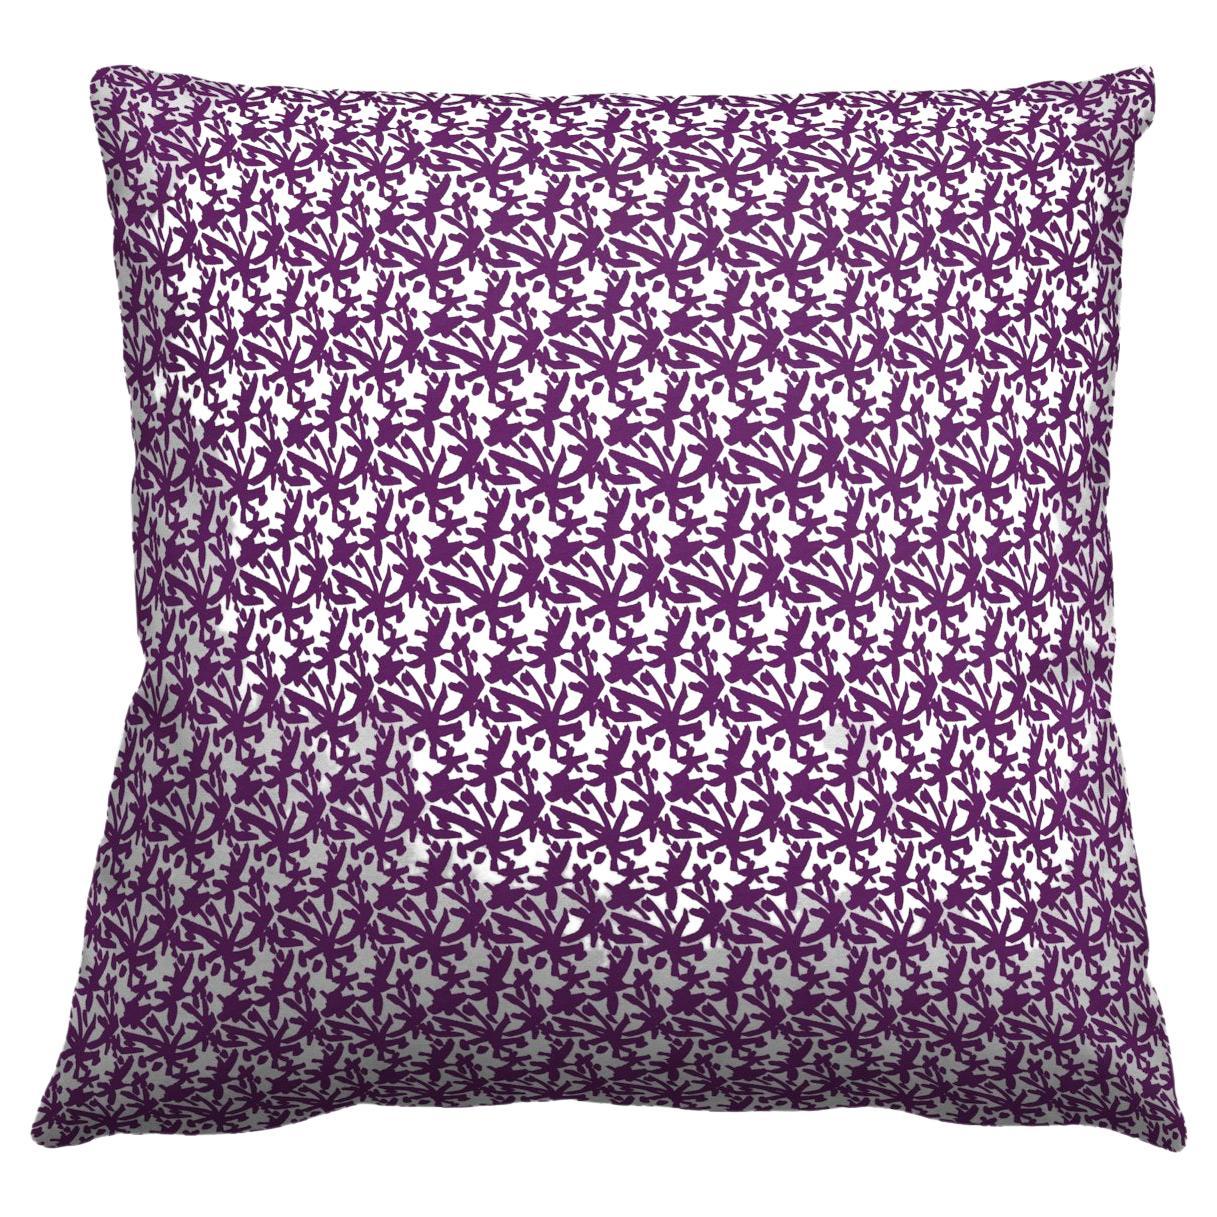 Juju Purple Pillow